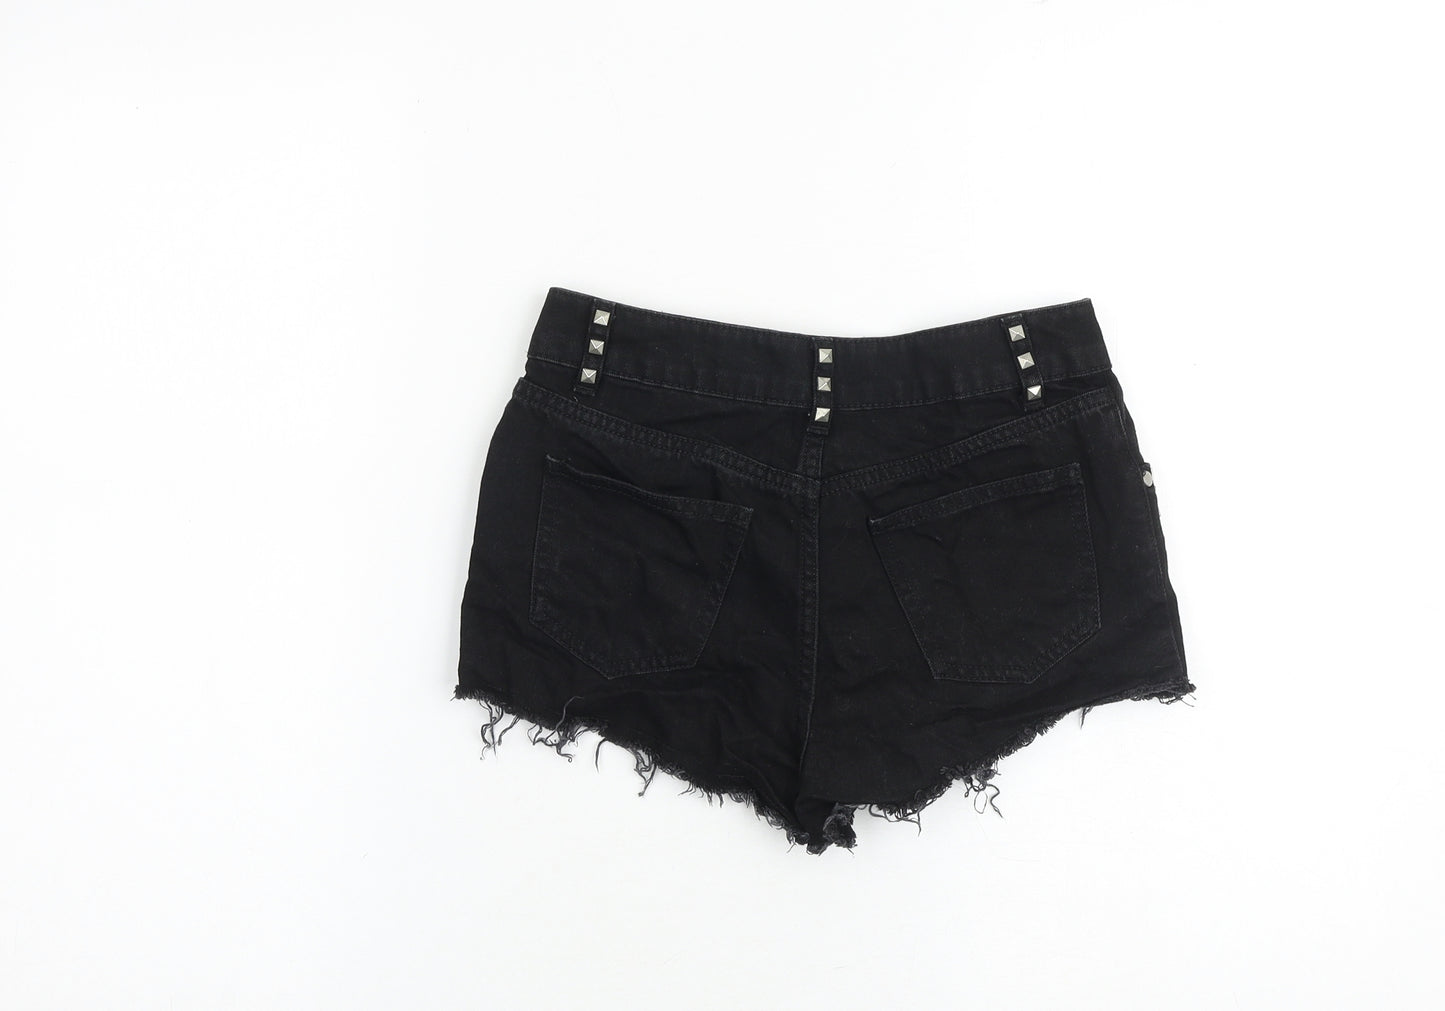 Miss Selfridge Womens Black Cotton Hot Pants Shorts Size 8 Extra-Slim Zip - Distressed